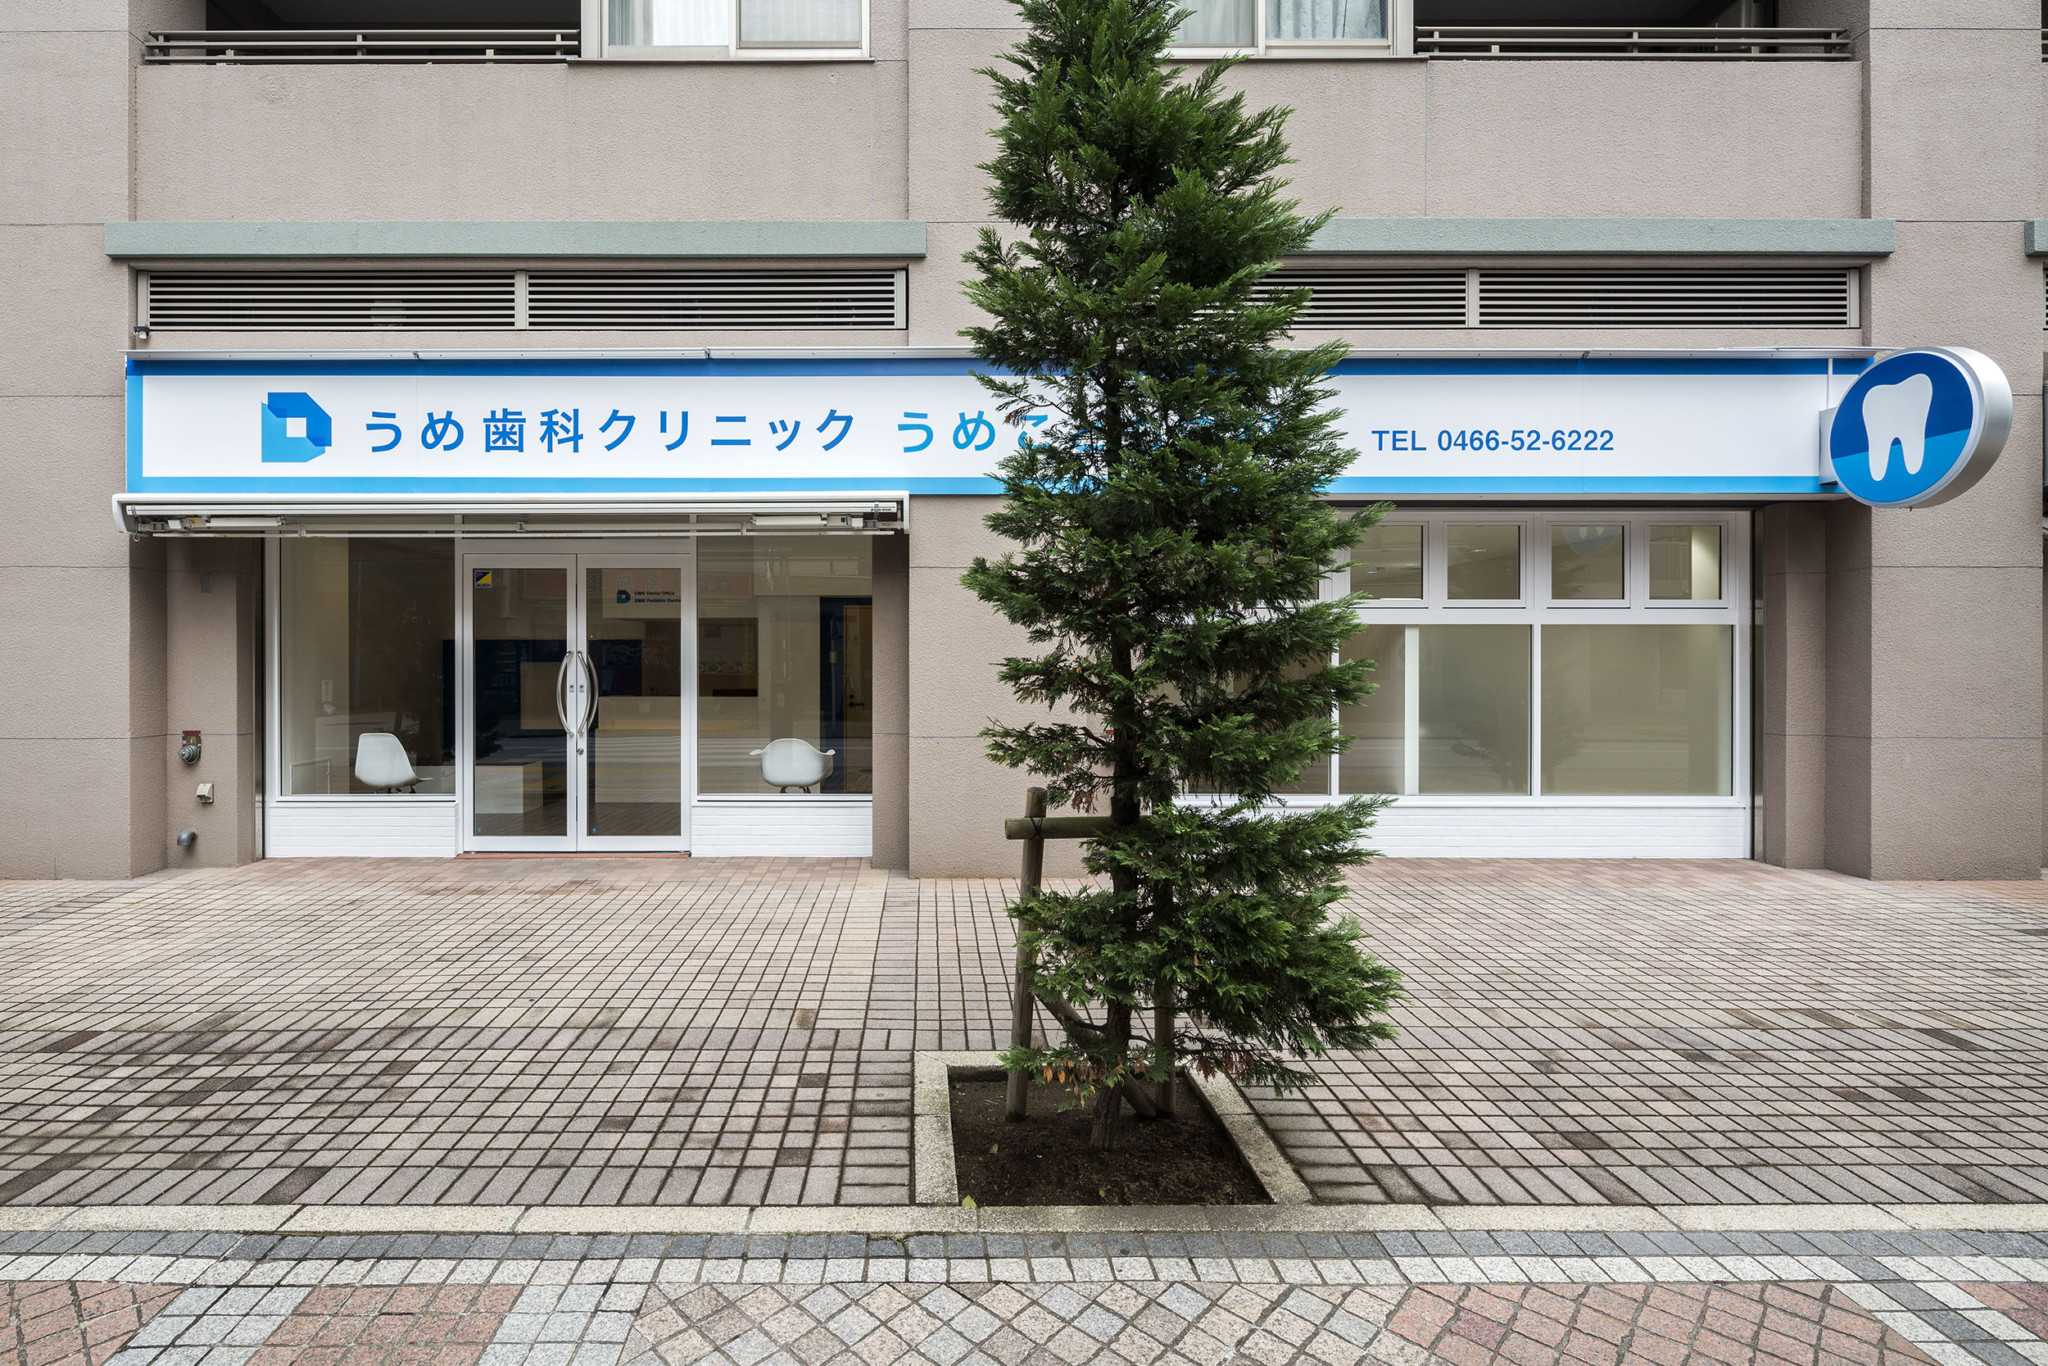 UME Dental Office Fujisawa